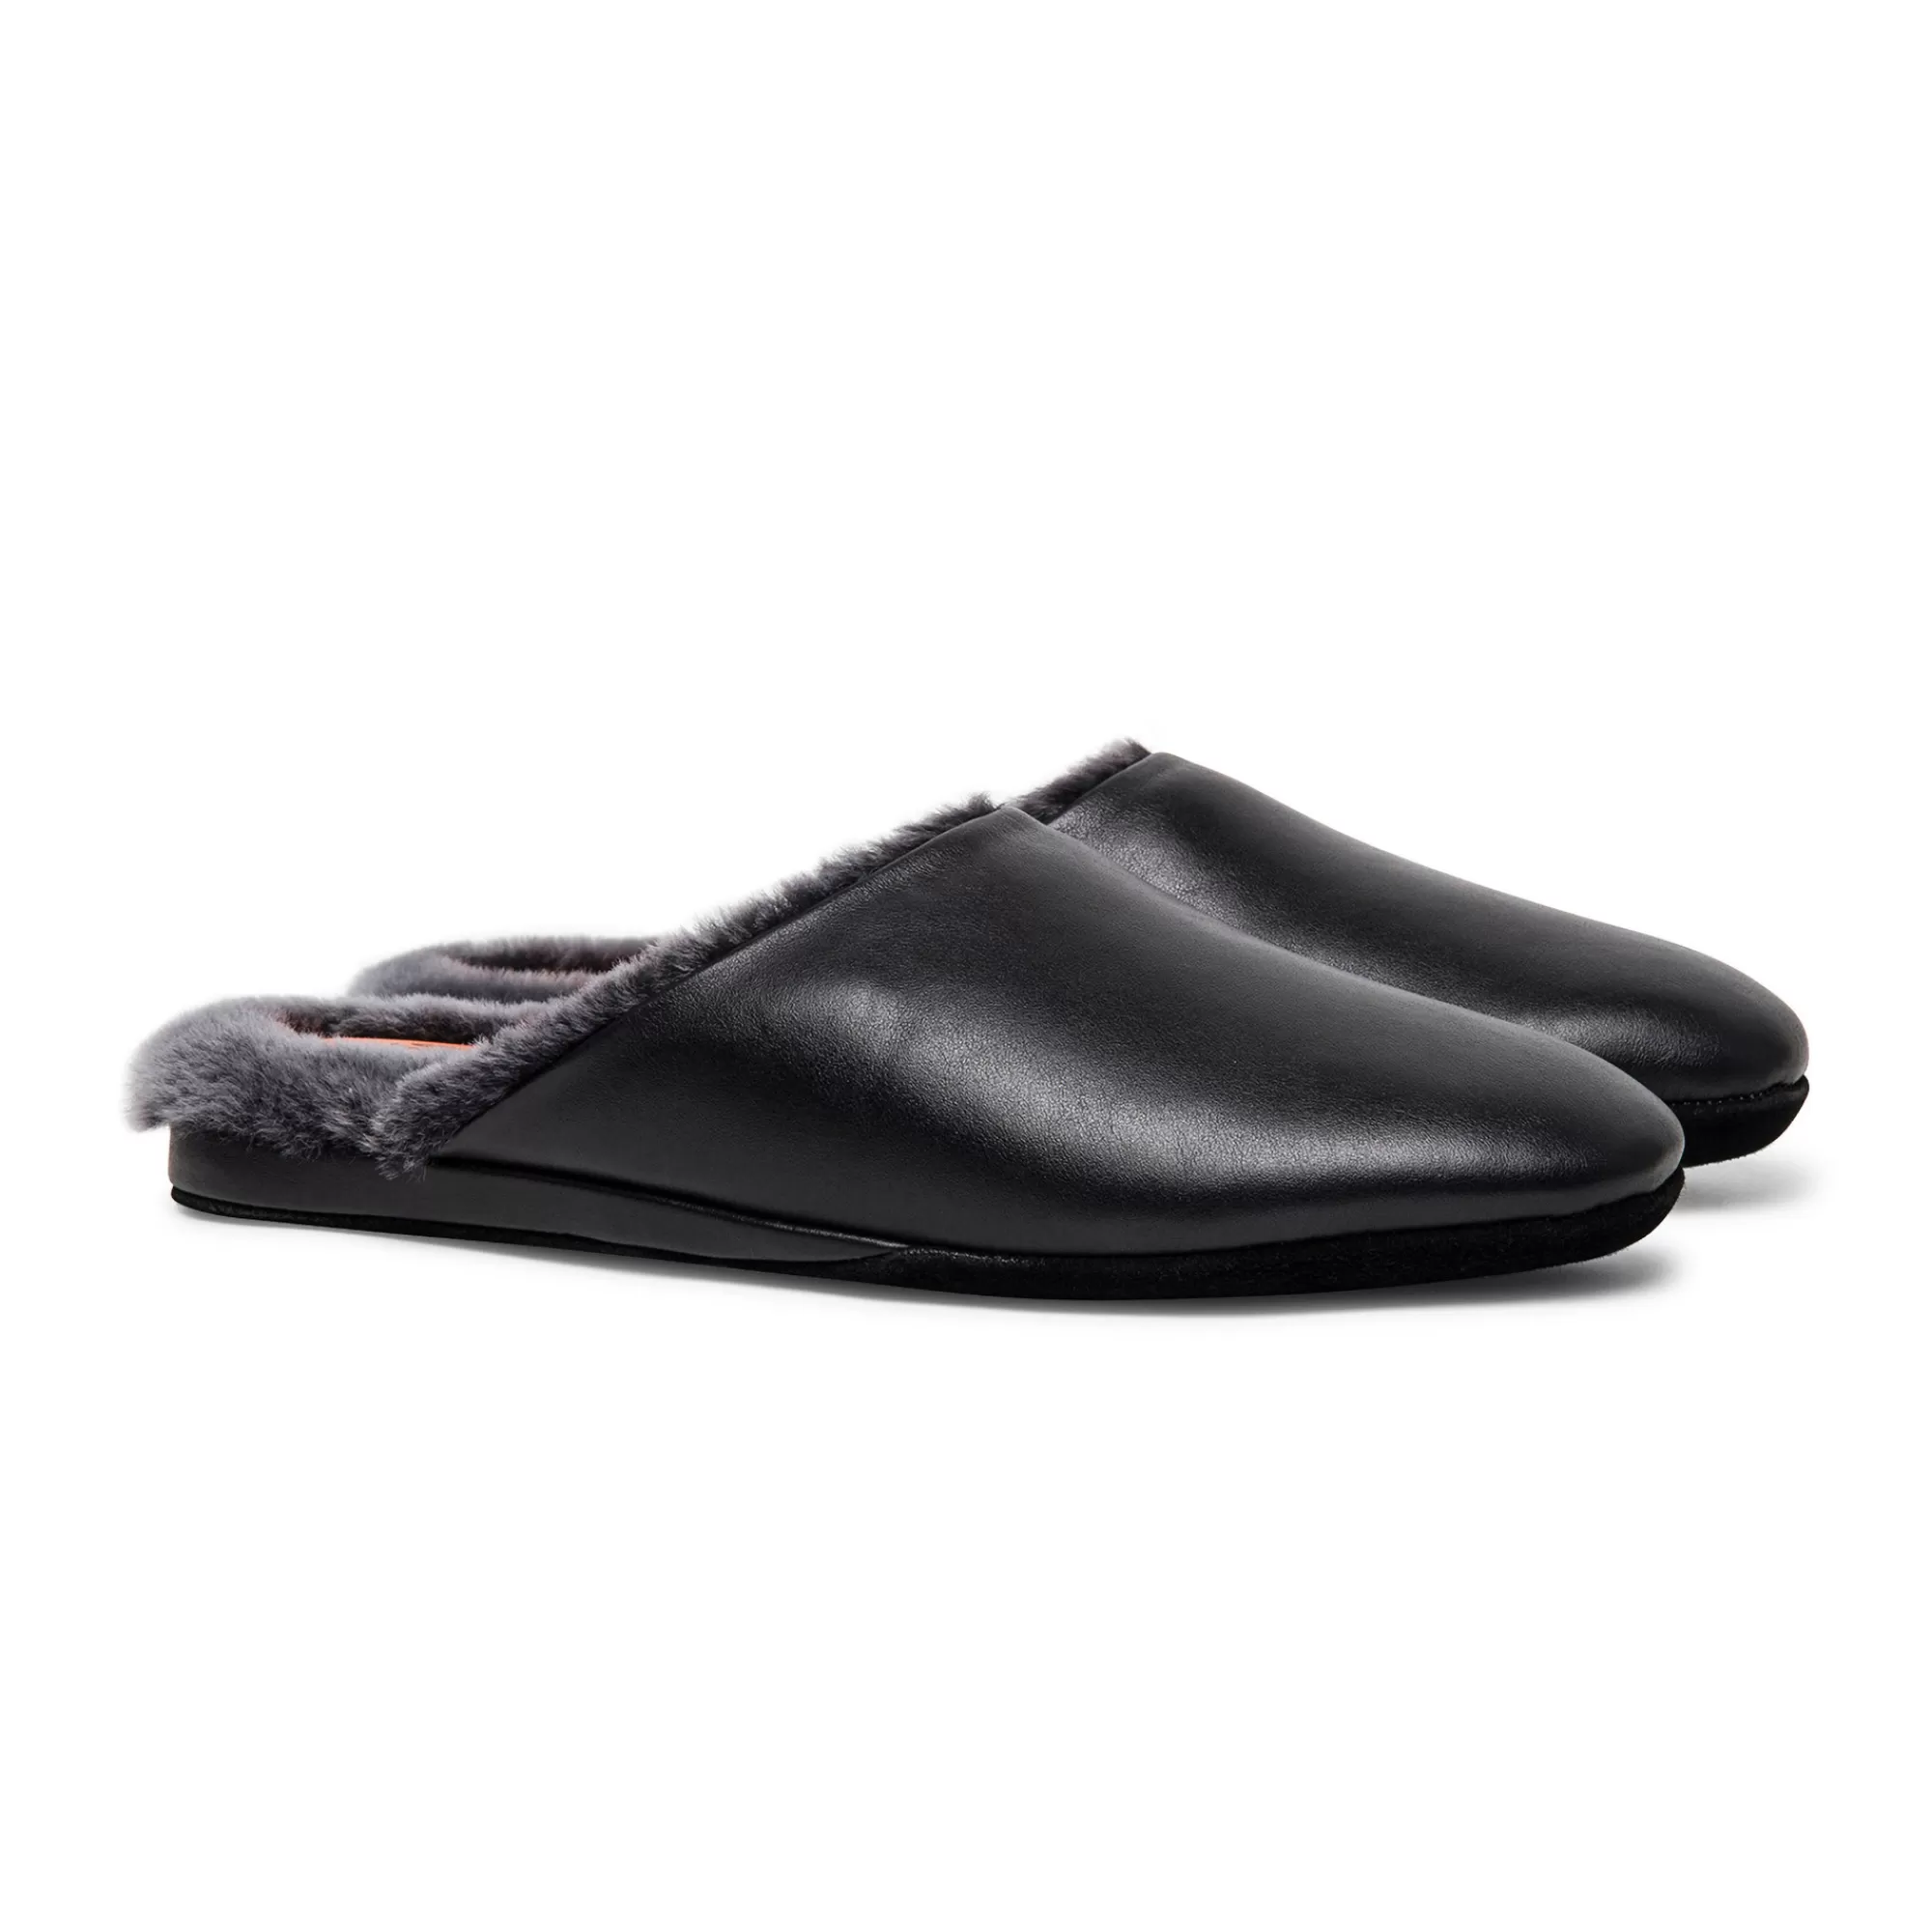 Fashion Pantofola da uomo in pelle anticata nera Vedi tutte le calzature | Pantofole